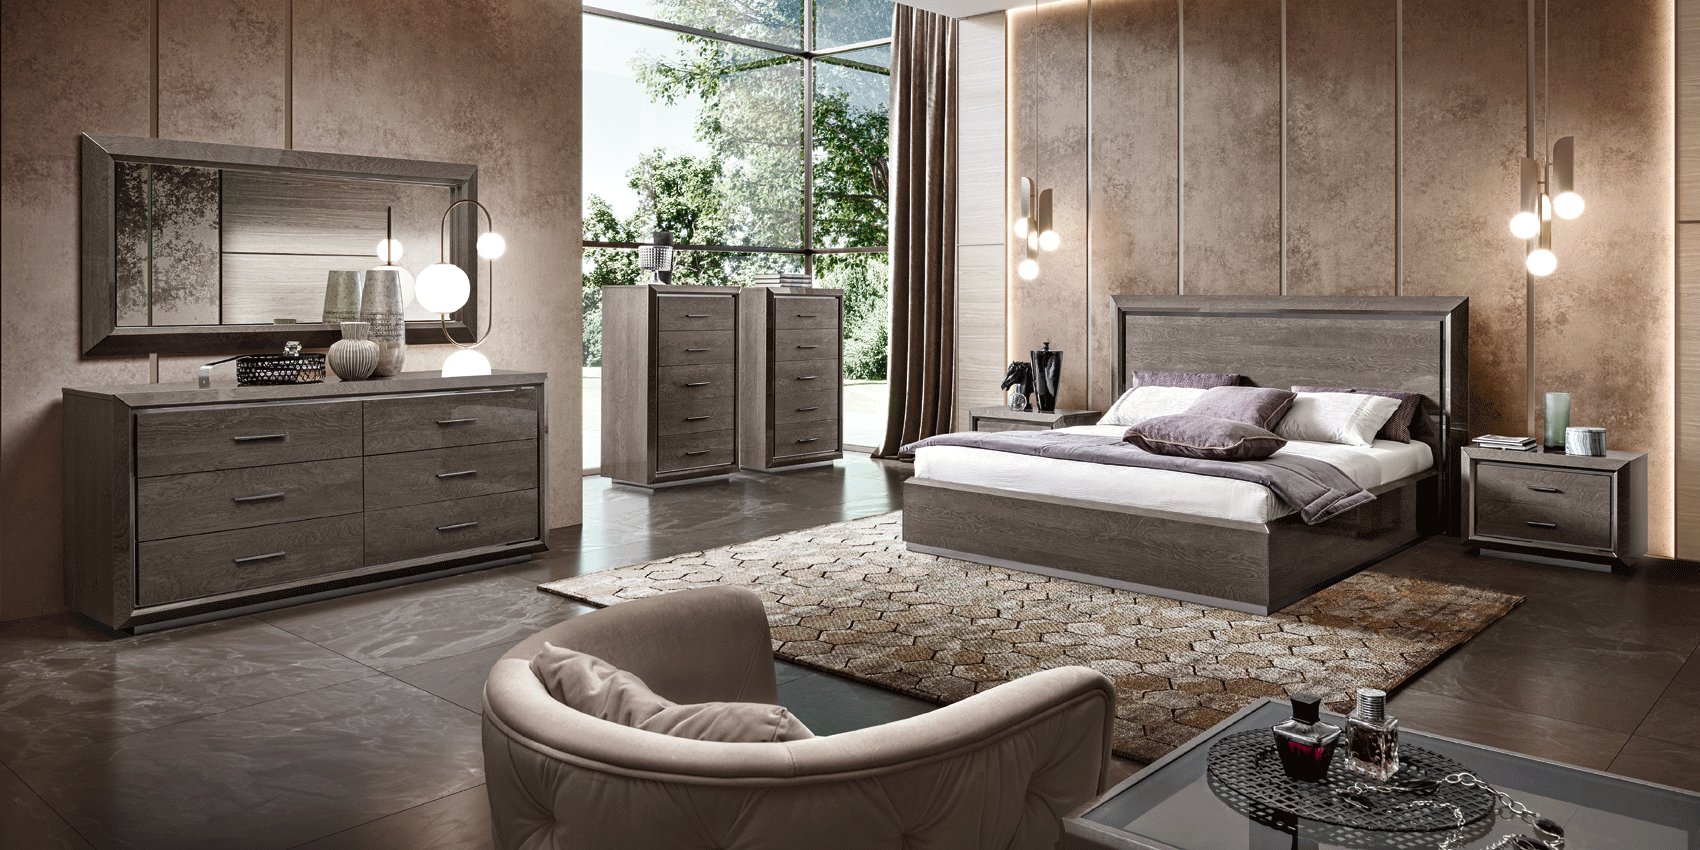 Bedroom Furniture Nightstands Elite Night "LEGNO" Additional Items